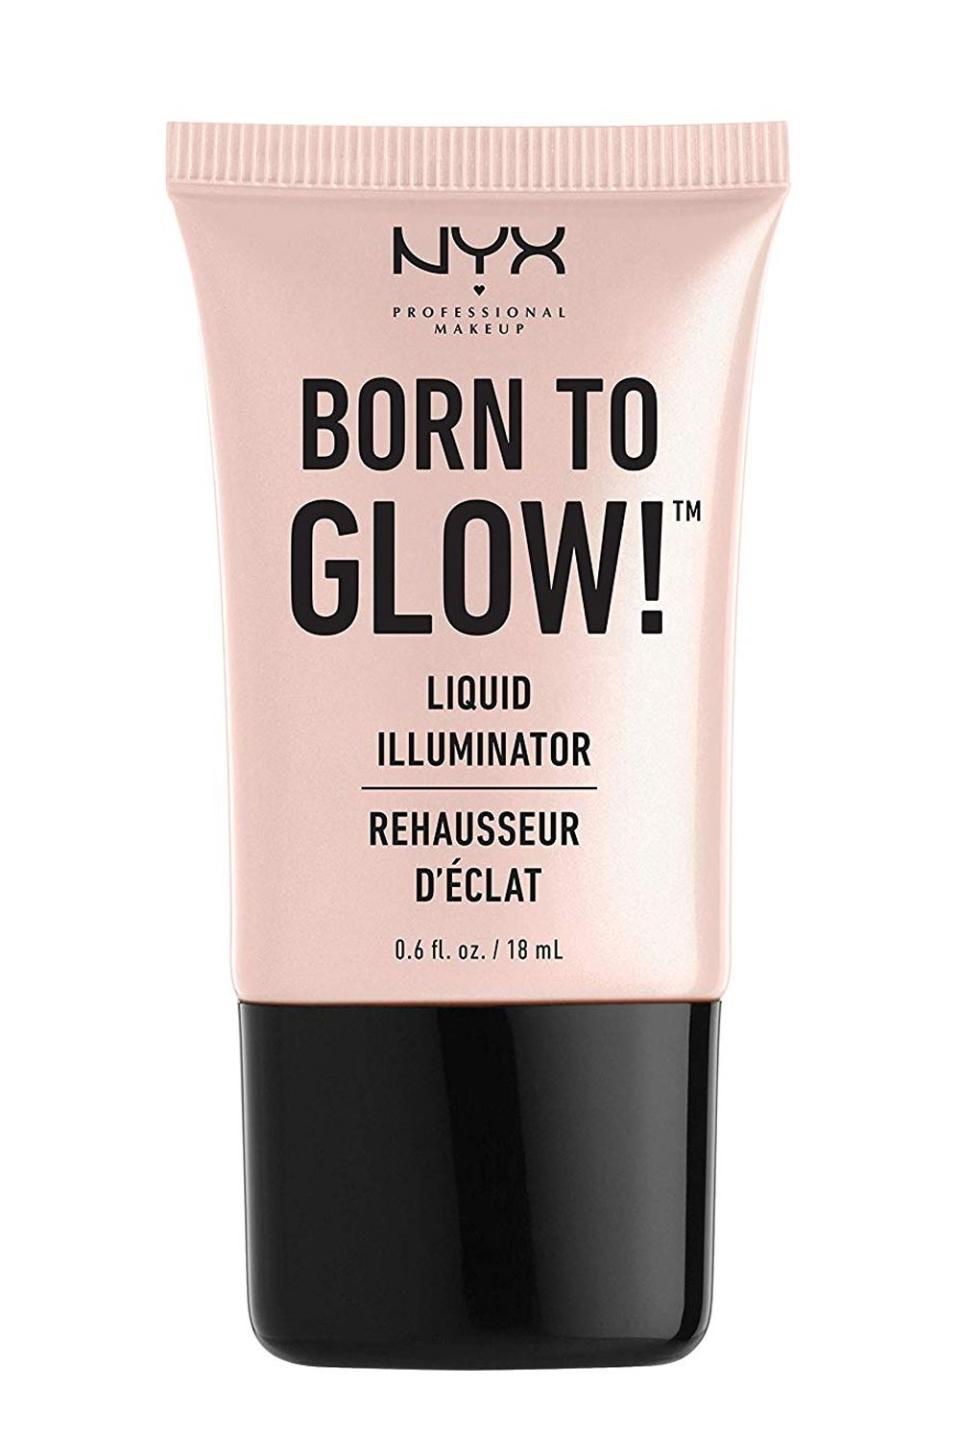 2) Nyx Professional Makeup Born to Glow Liquid Illuminator